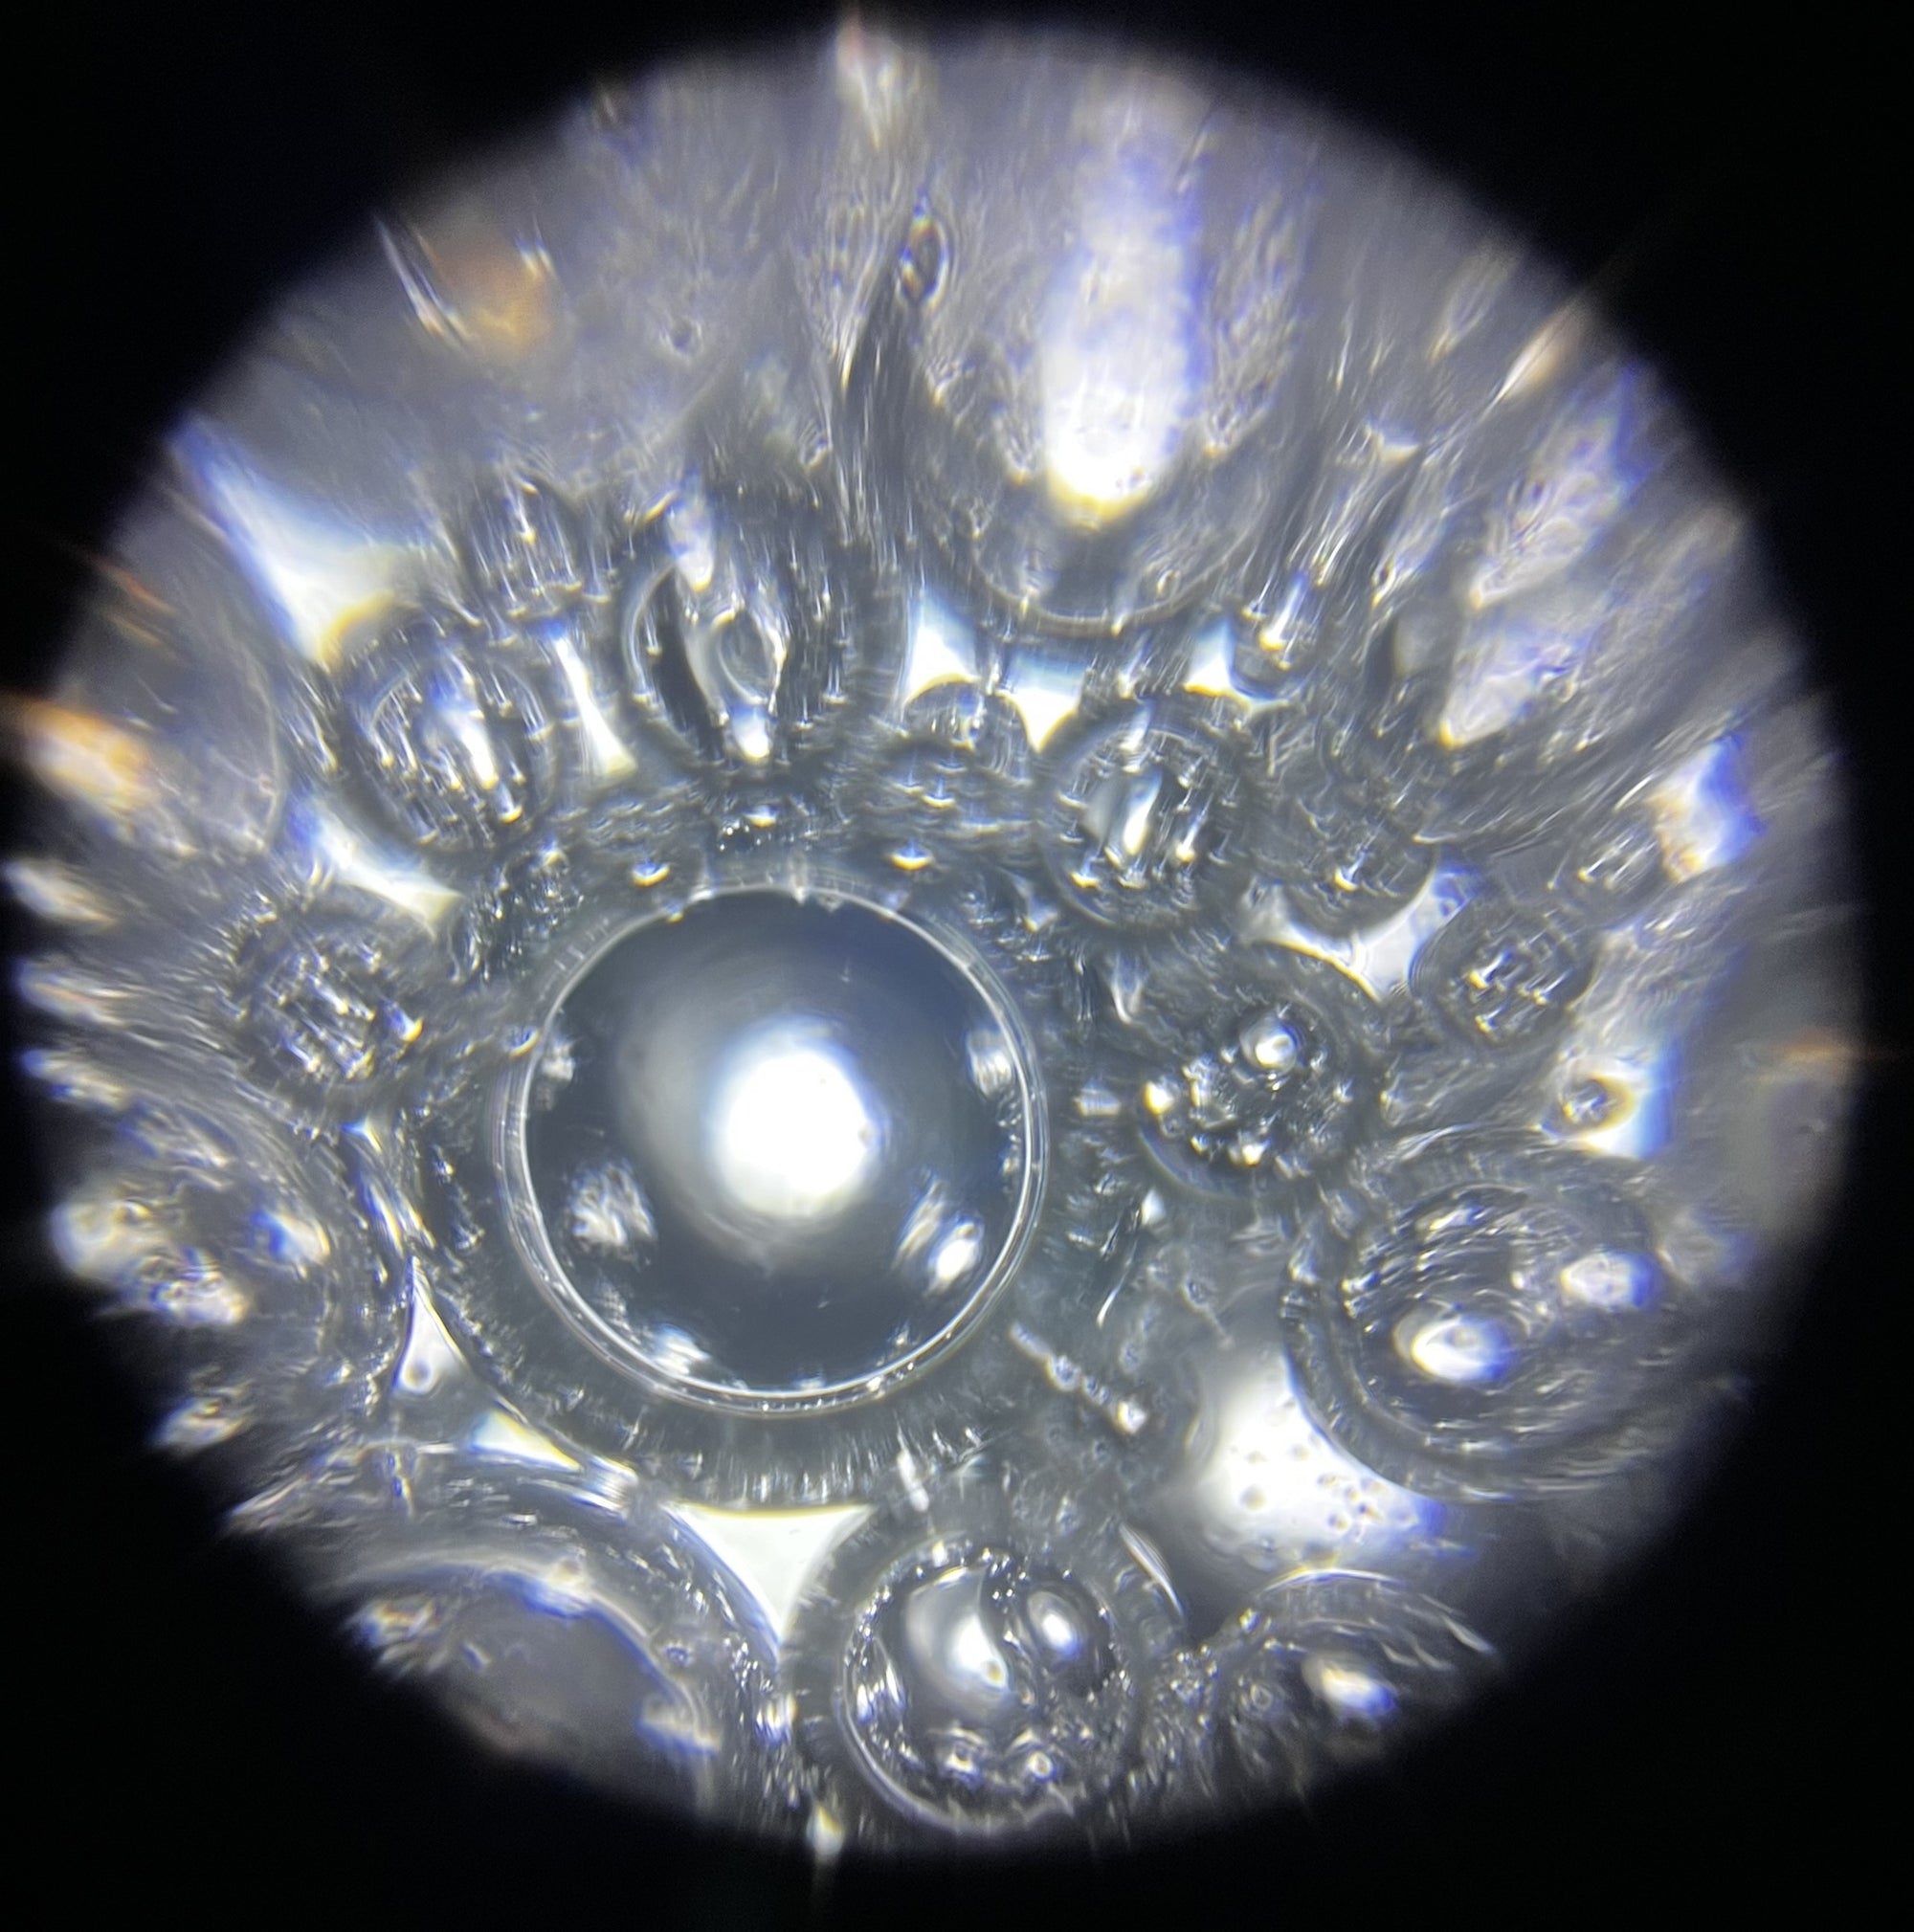 Foldscope In The Classroom: Bubbles!